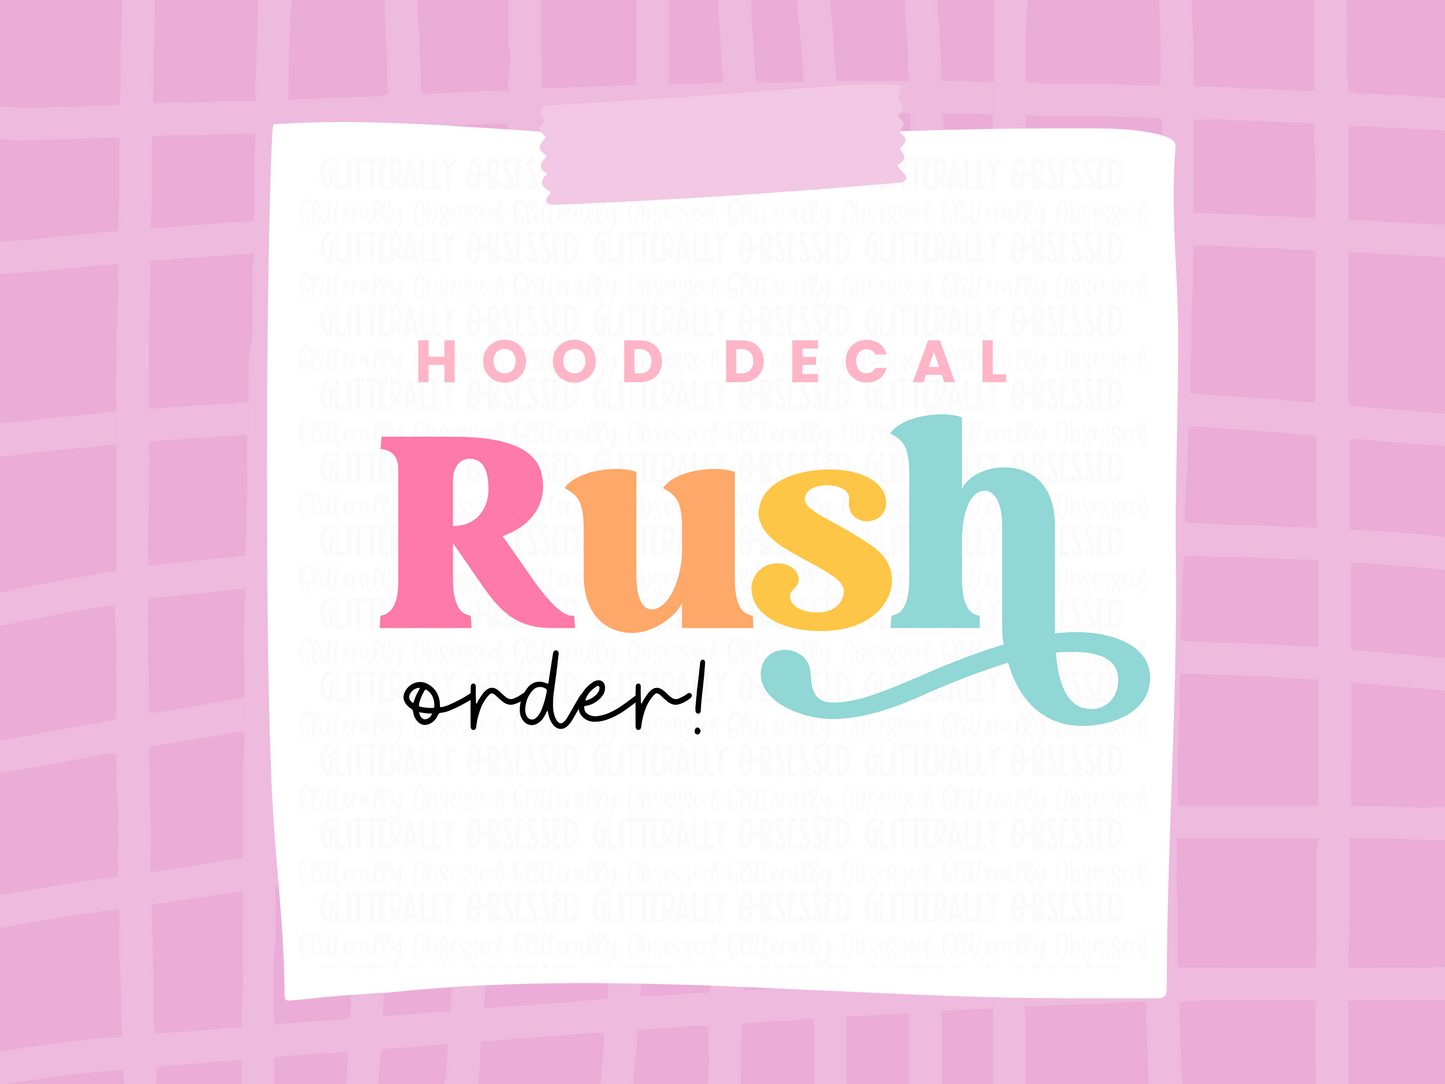 Hood Decal Rush Order